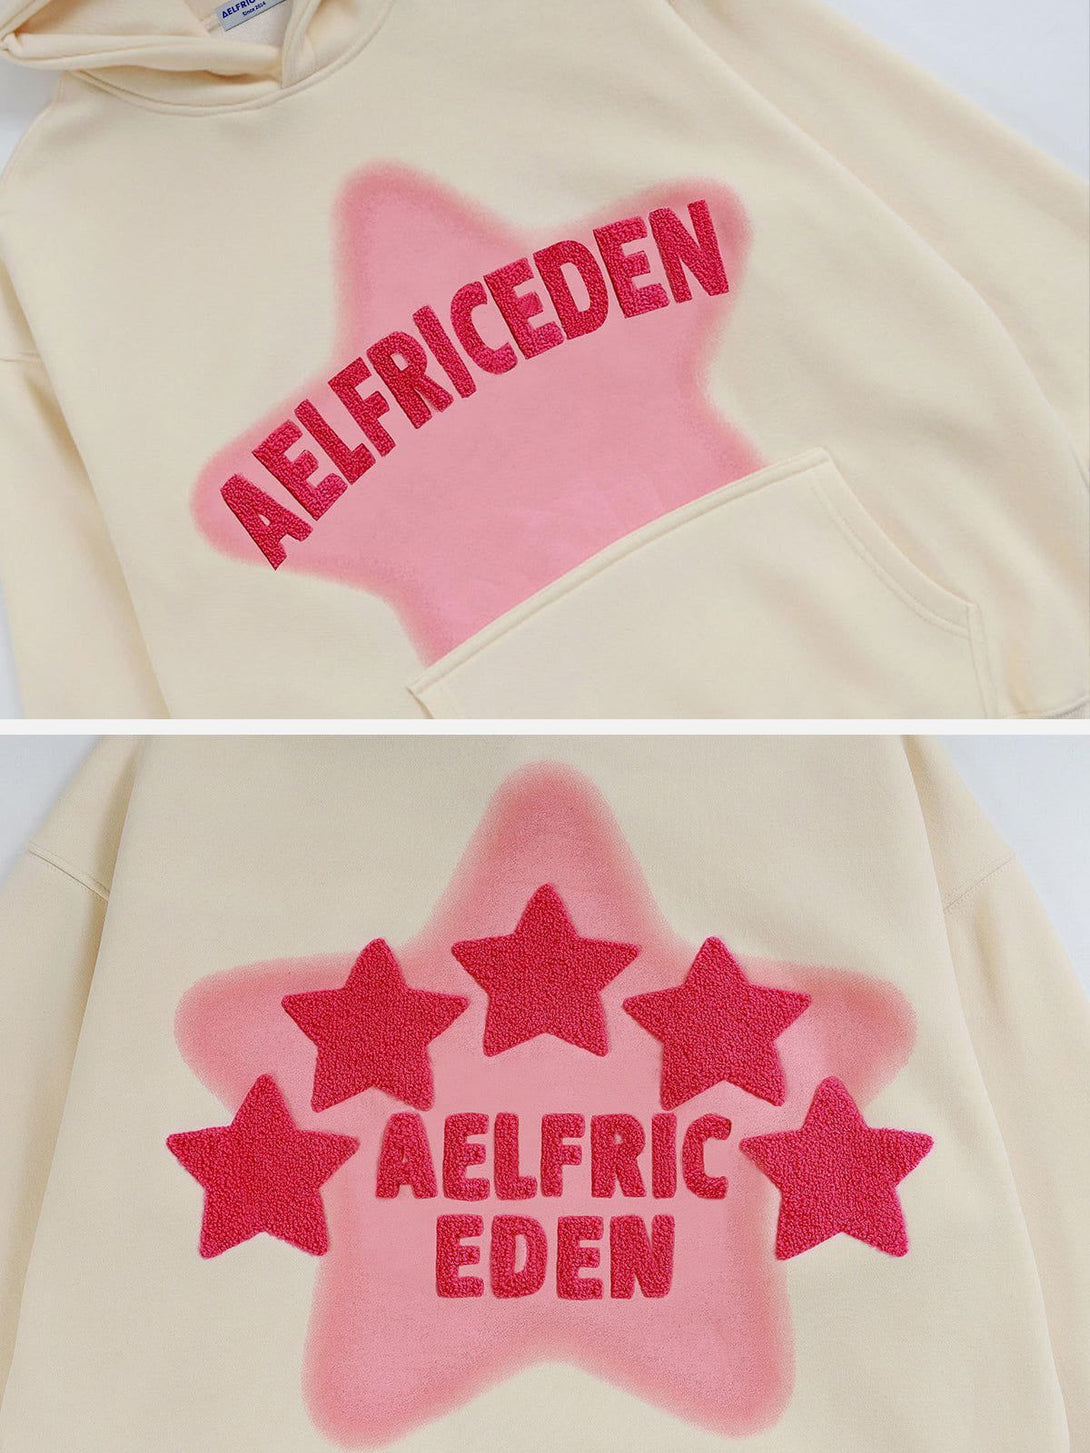 Aelfric Eden Vintage Embroidery Star Hoodie – Aelfric eden